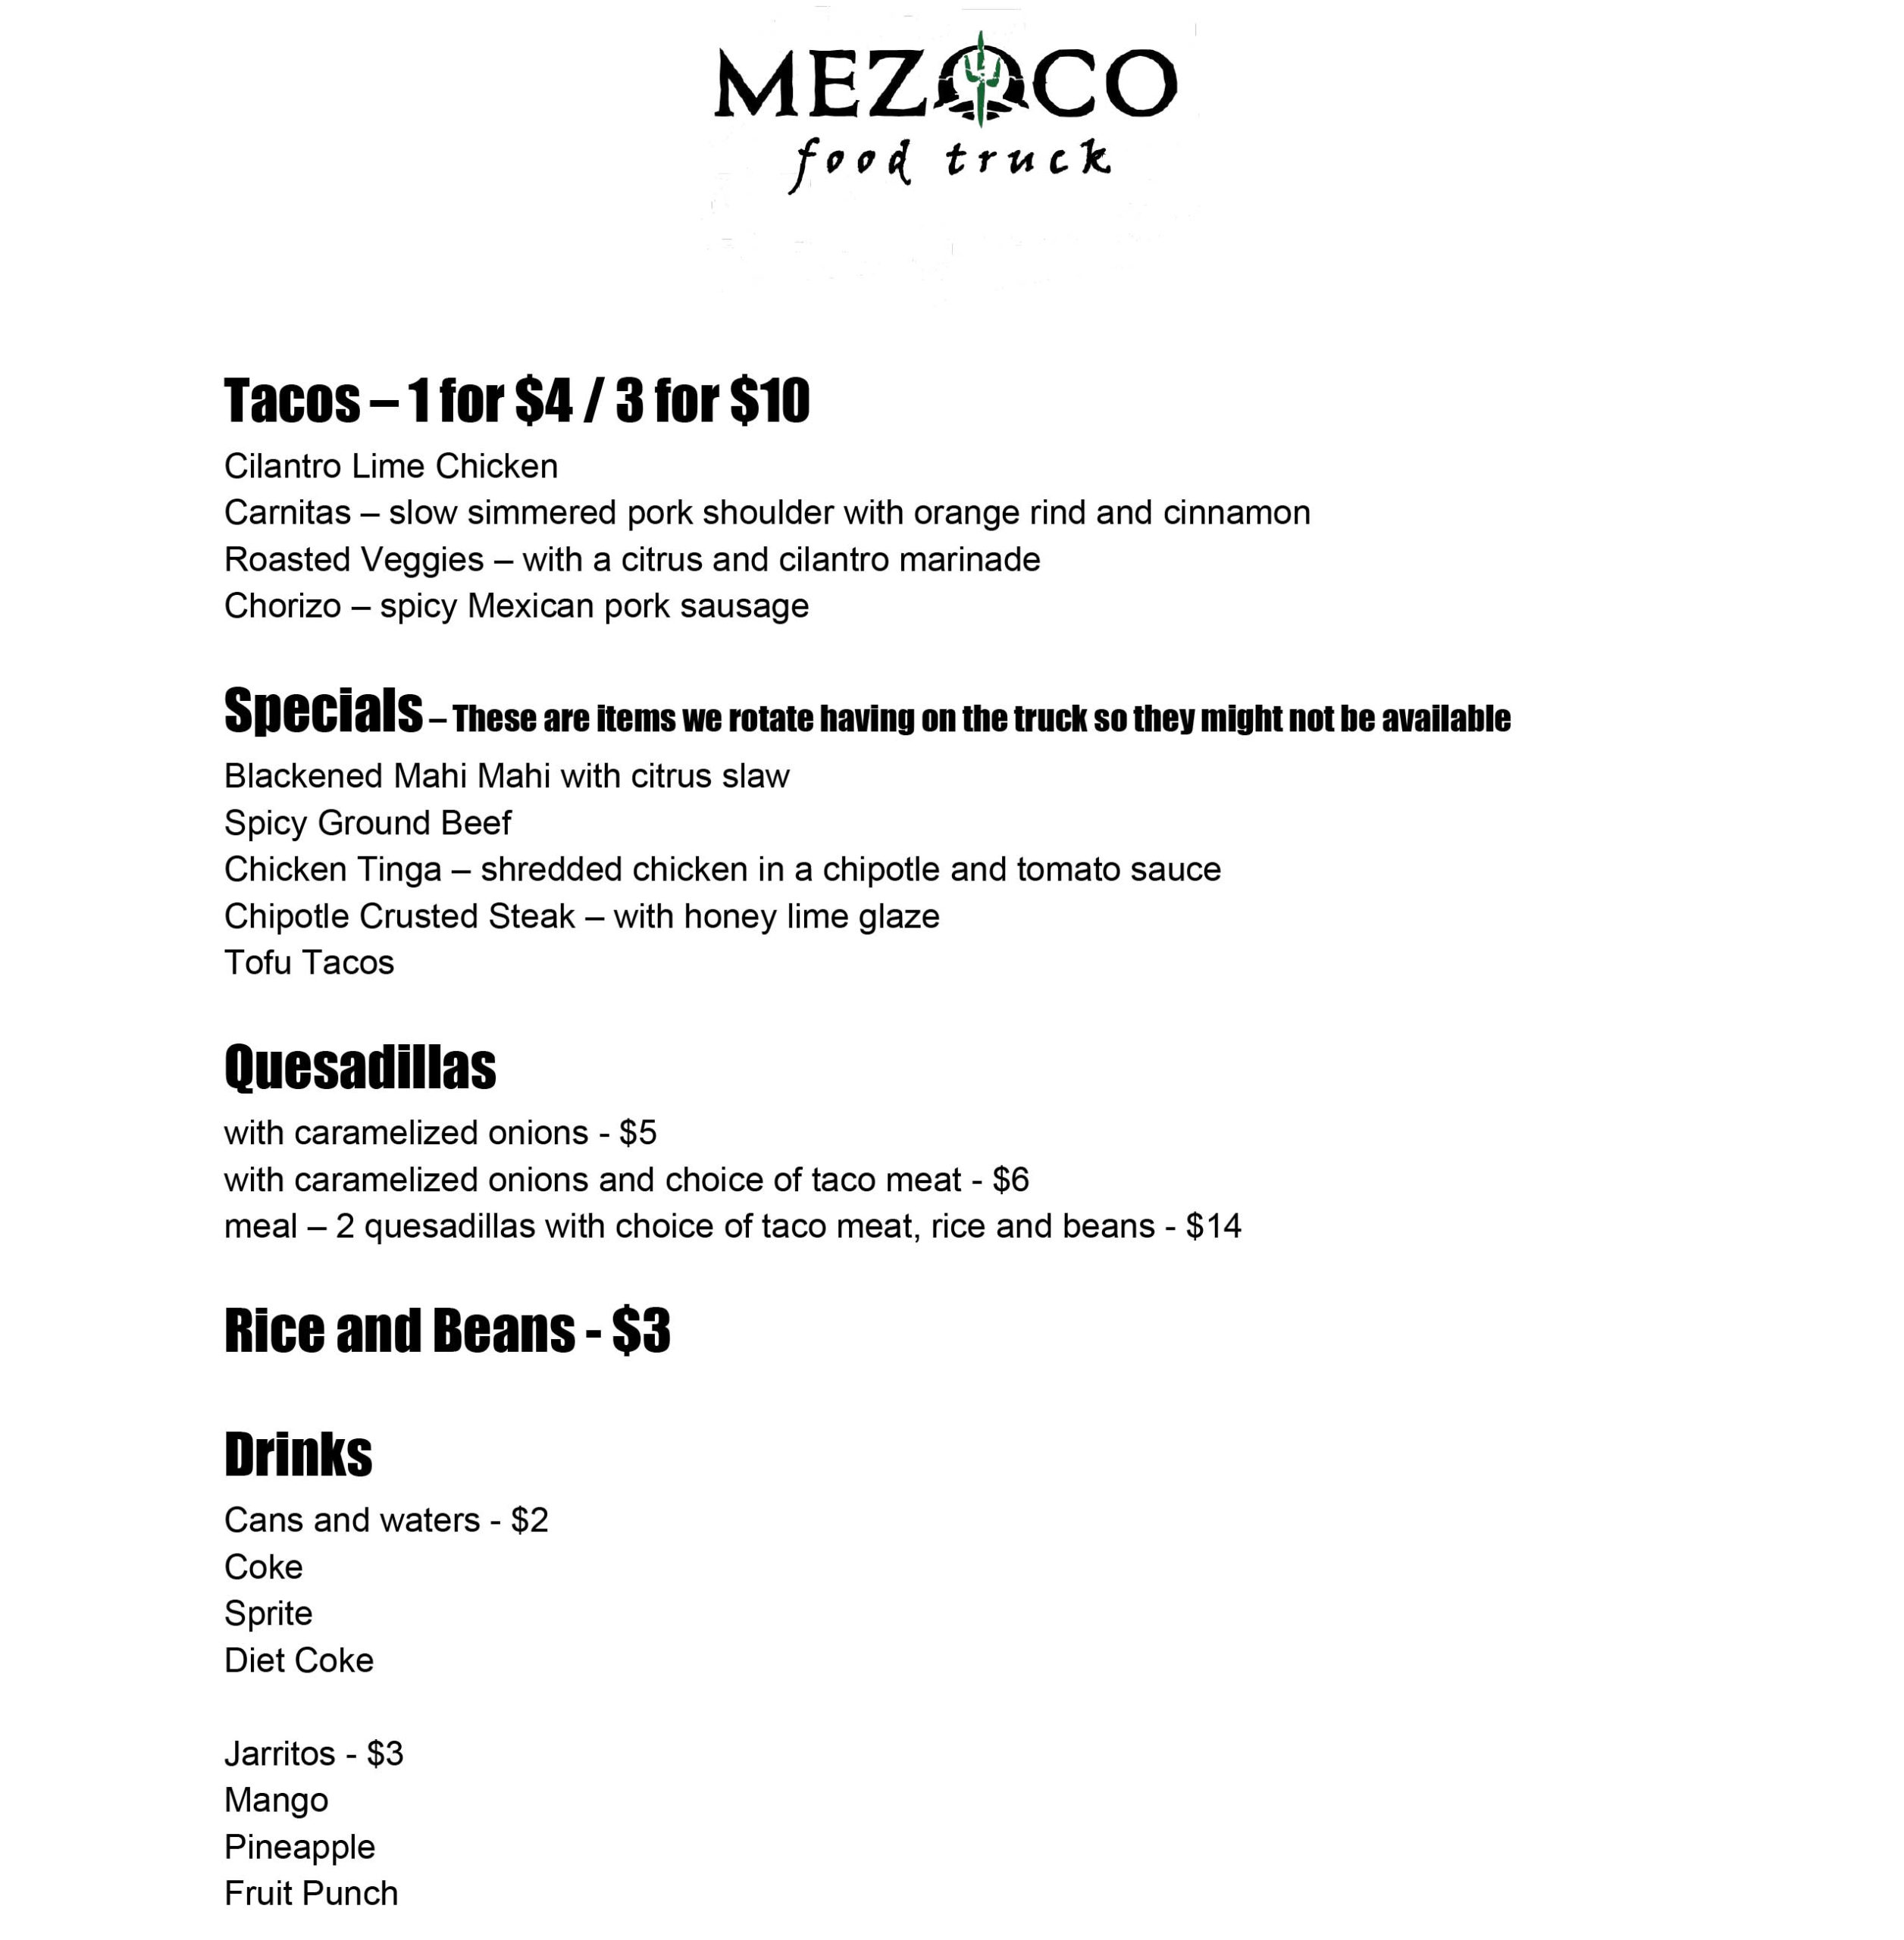 Mezoco Menu | Food Trucks On The Move